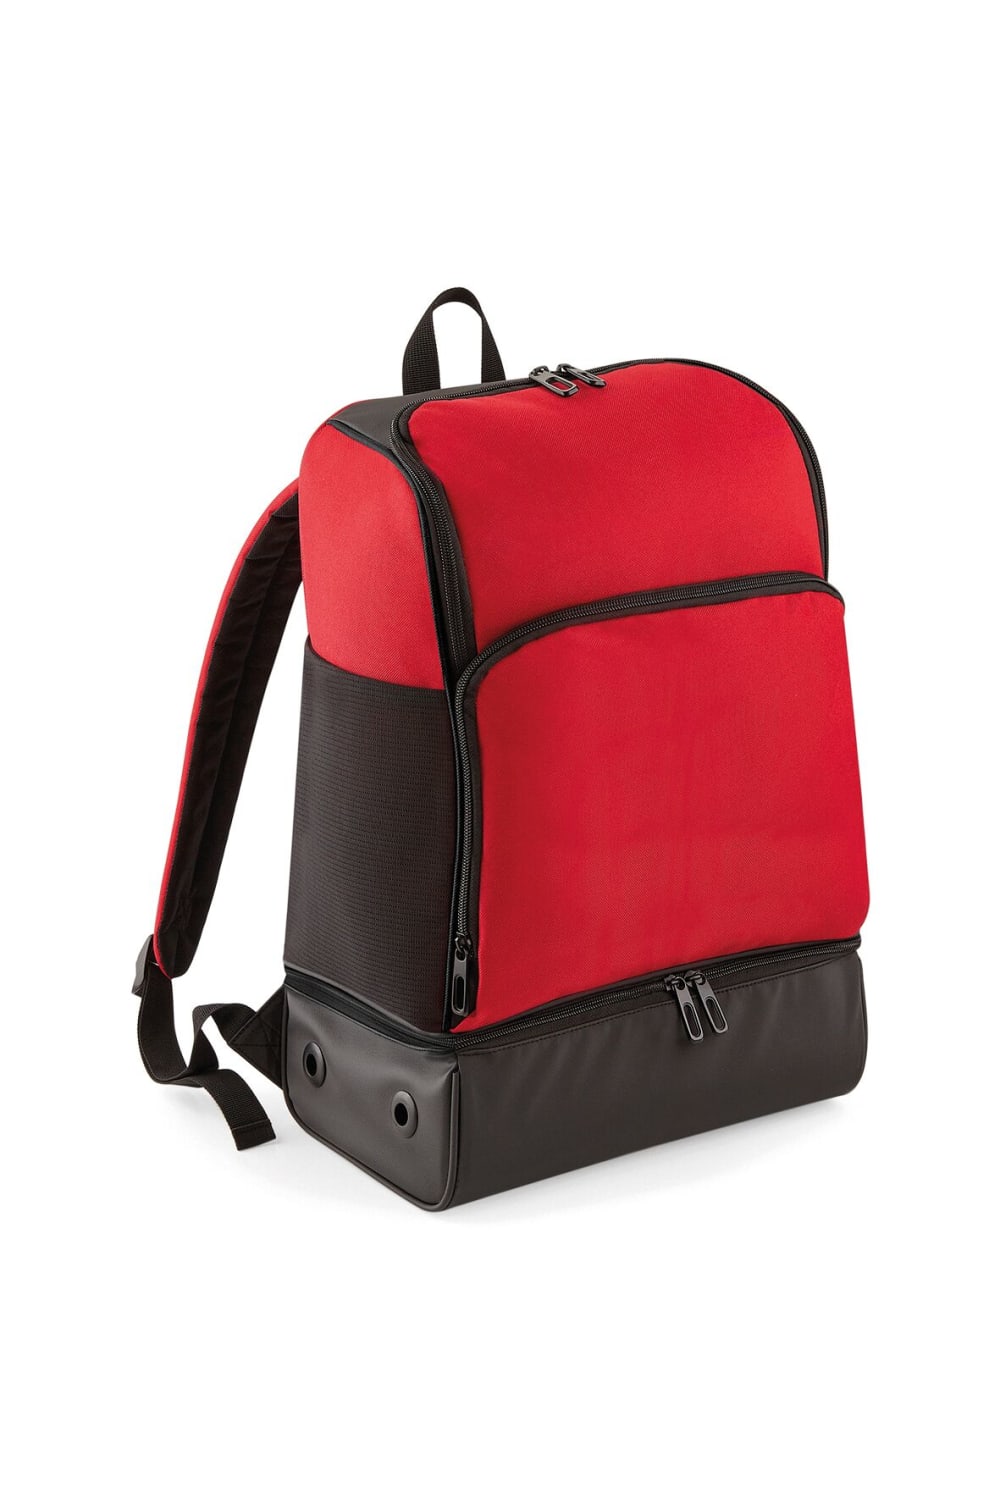 Hardbase Sports Backpack - Classic Red/Black